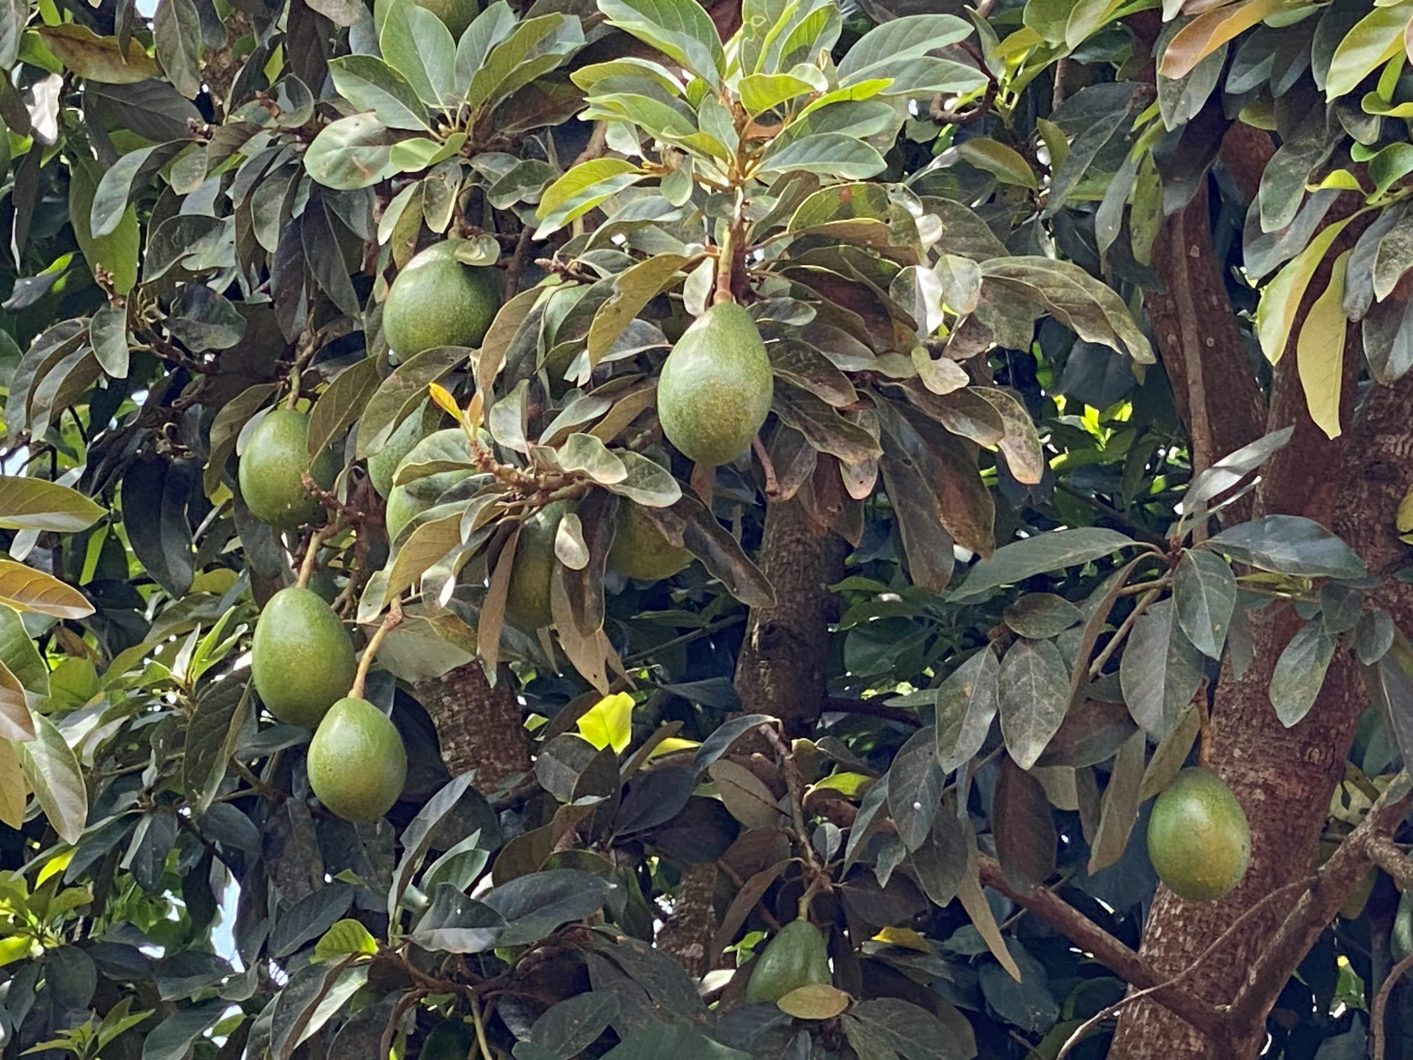 Avocado trees at The Mustardseed Primary School in Uganda